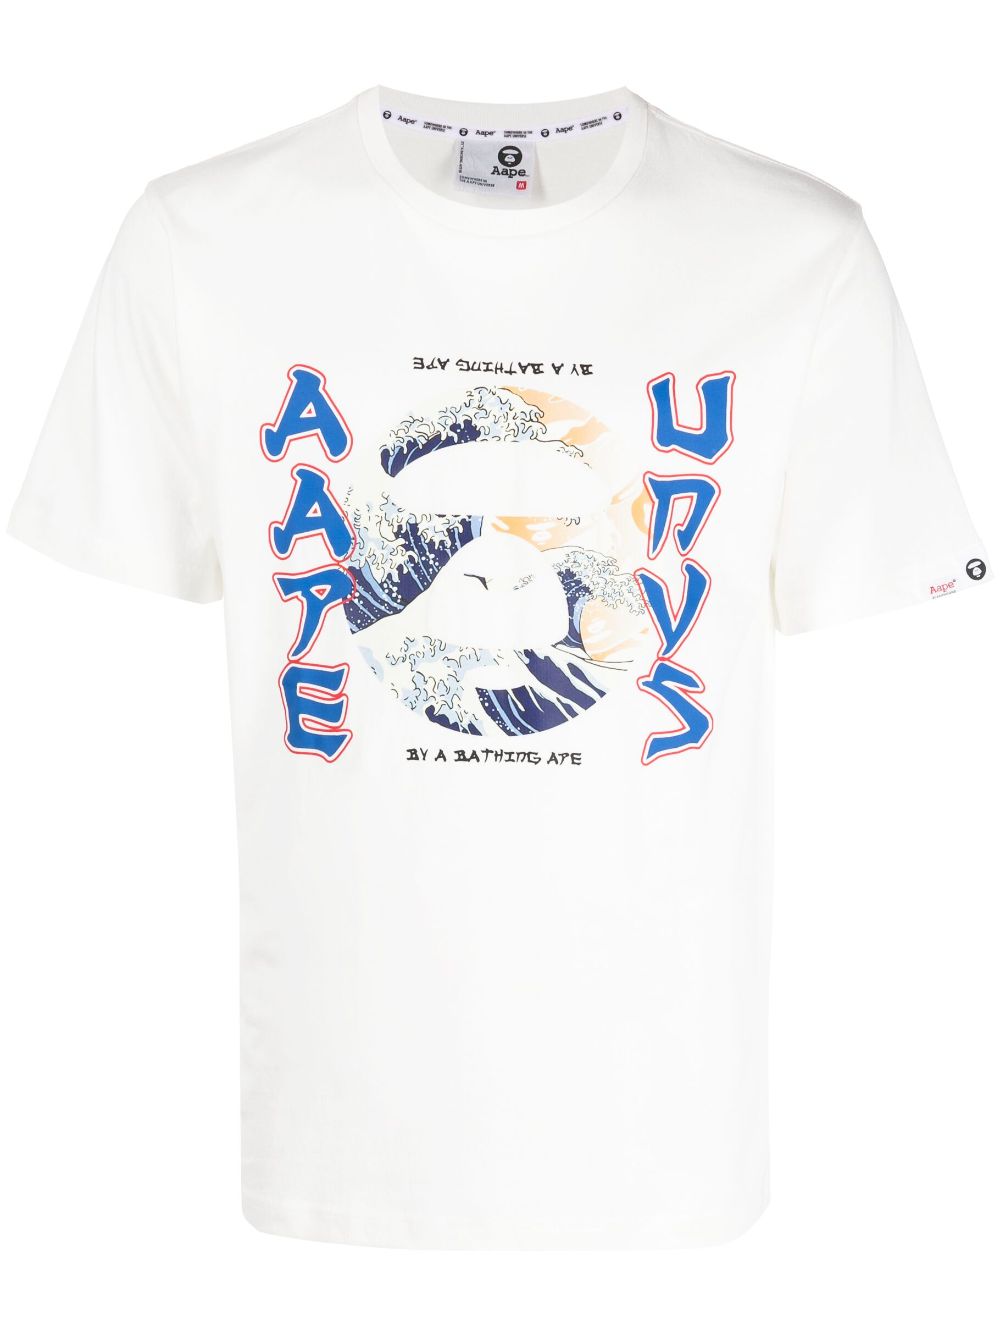 AAPE BY *A BATHING APE® T-Shirt mit Logo-Print - Weiß von AAPE BY *A BATHING APE®